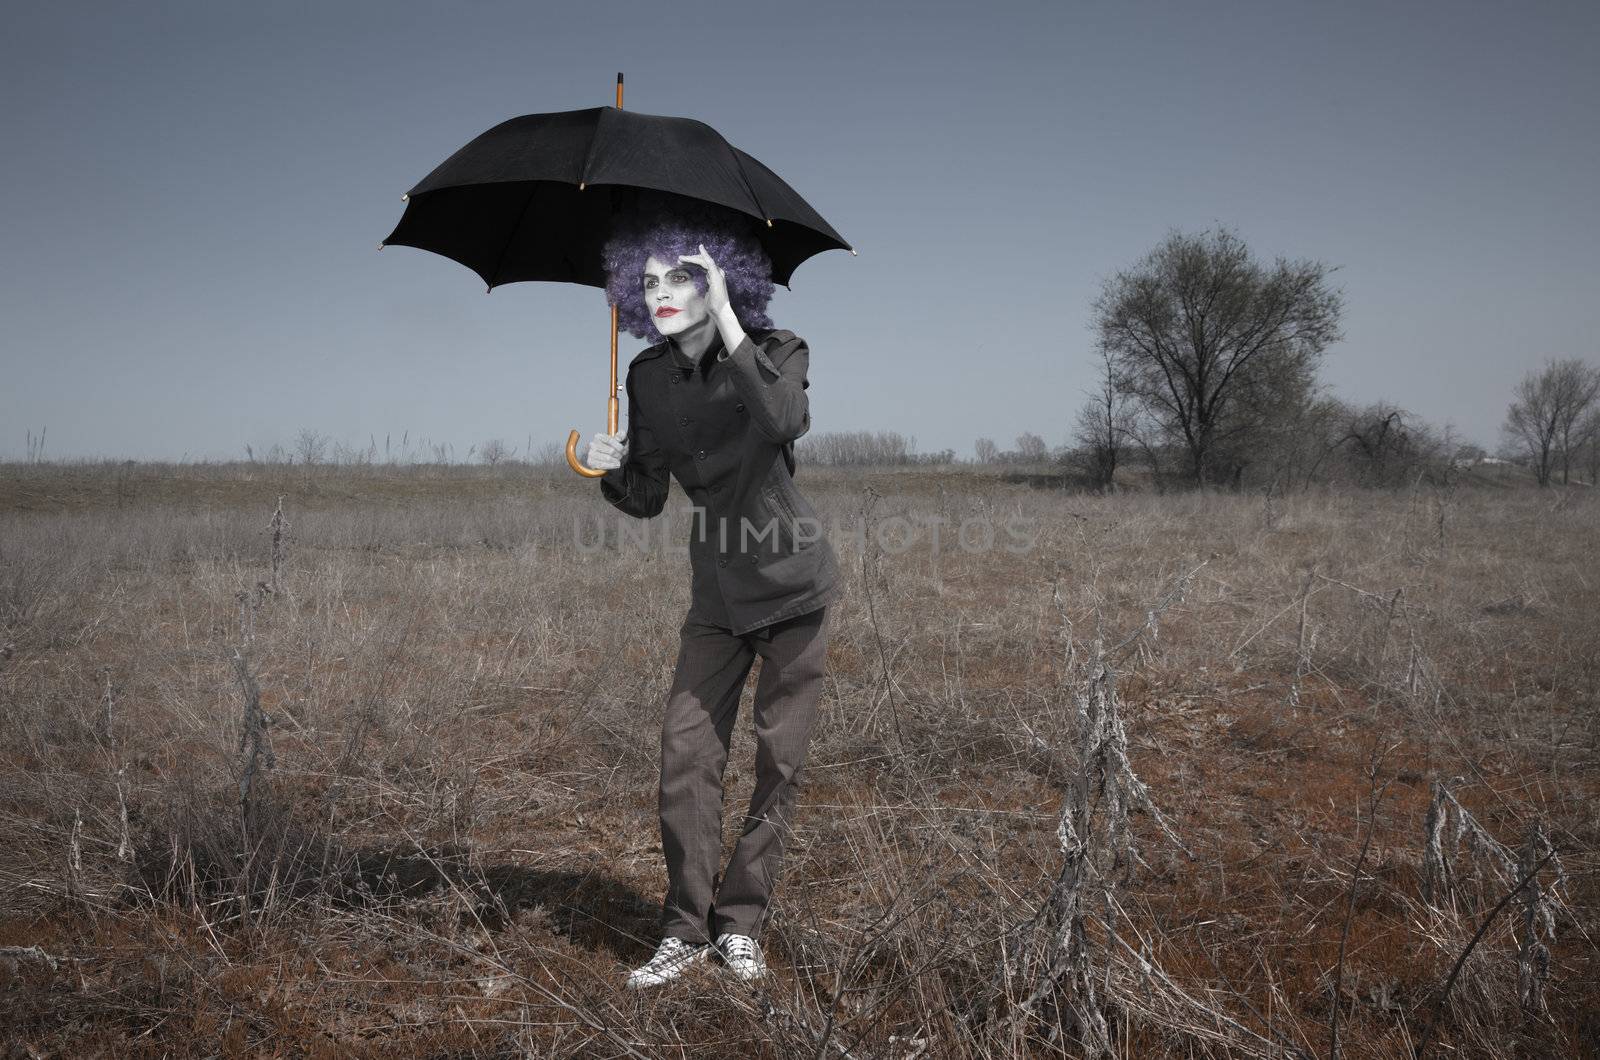 Funny man and umbrella by Novic